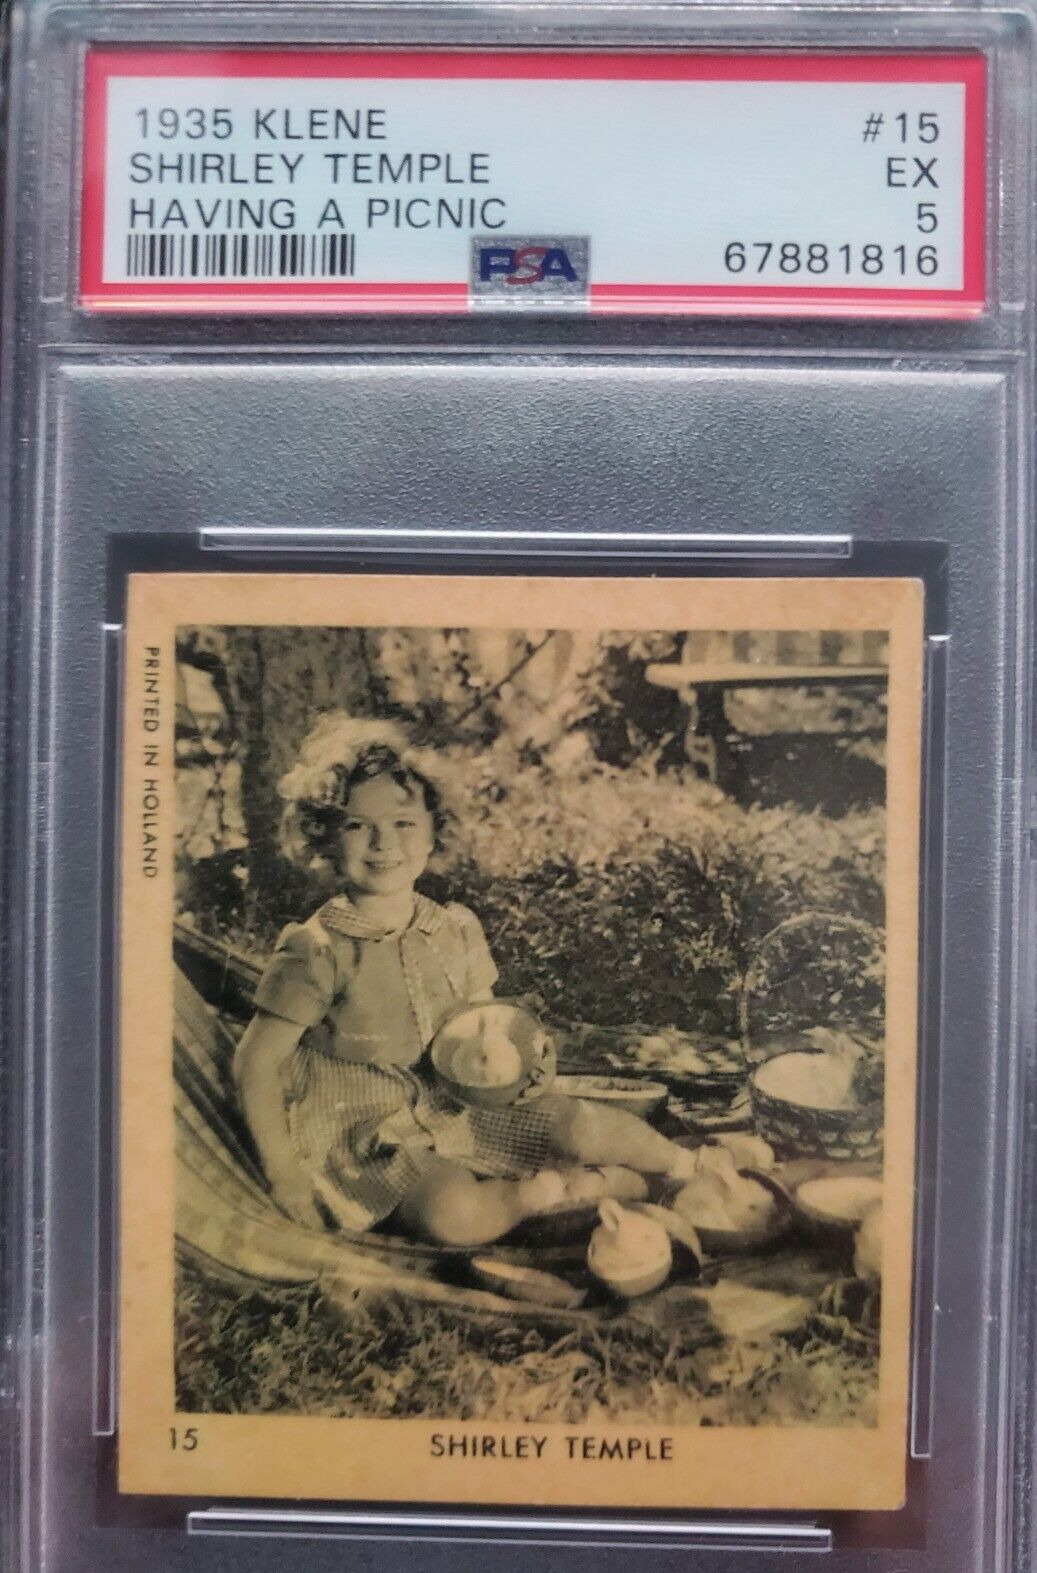 1935 Klene - Shirley Temple - Having Picnic - #15 - PSA 5.  Wonderful card....